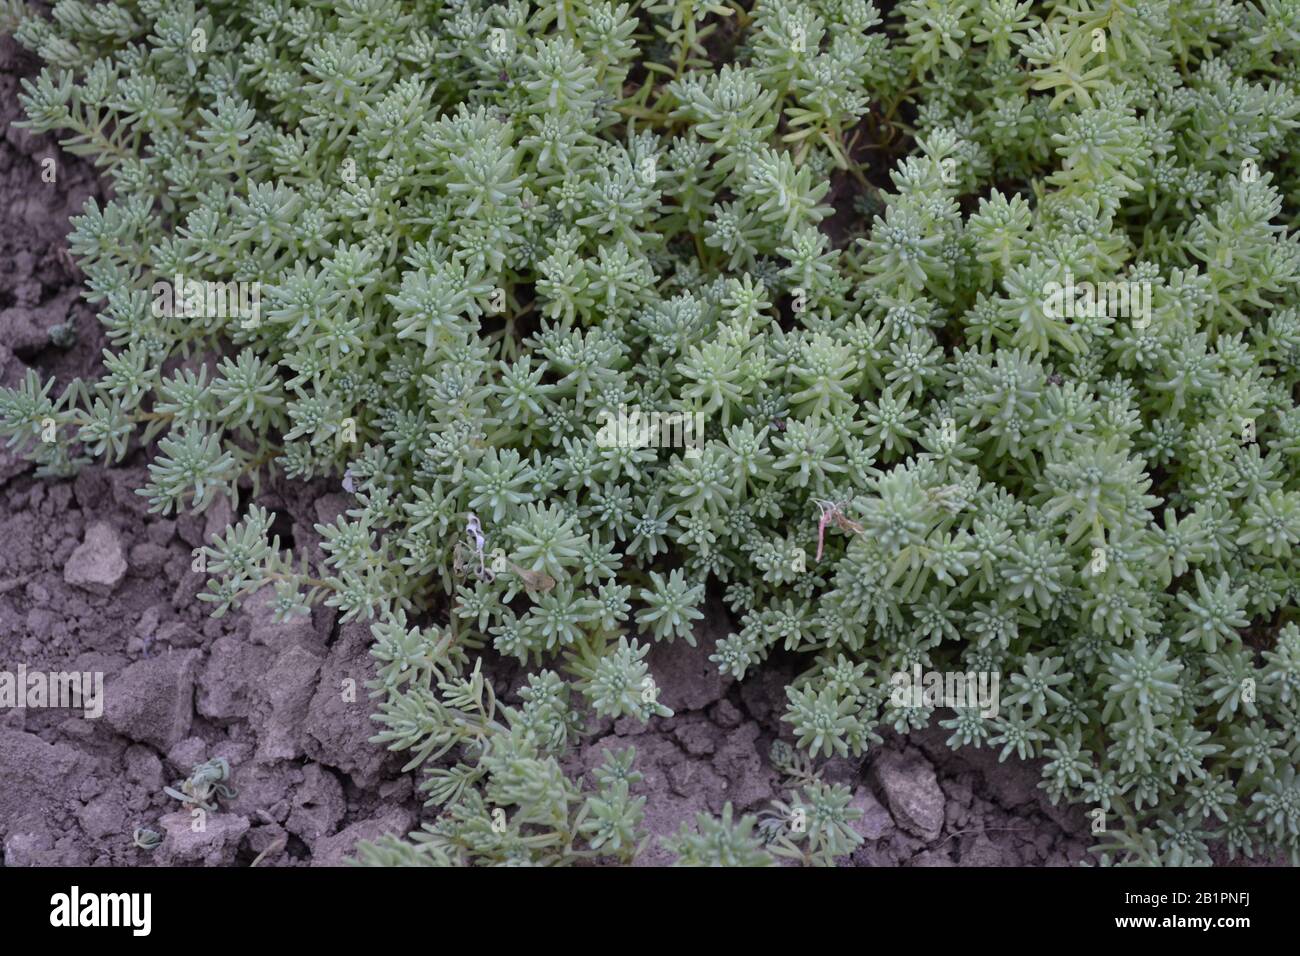 Stonecrop. Hare cabbage. Sedum. Green moss. Decorative grassy carpet. Green flower bed decoration. Garden beautiful. Horizontal photo Stock Photo